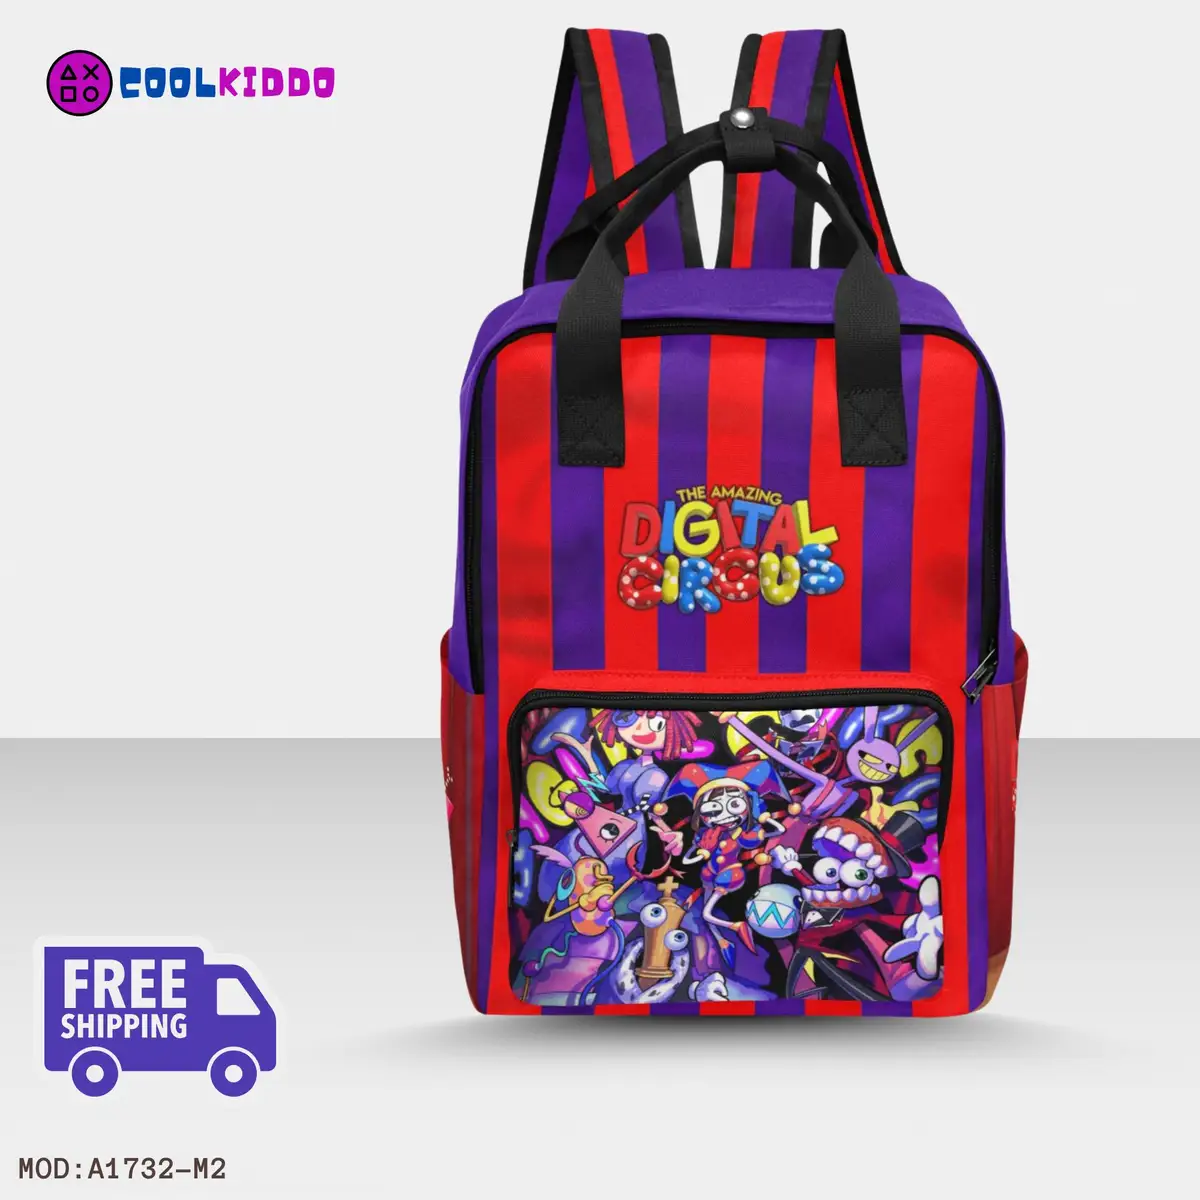 Amazing Digital Circus Handle Backpack. Book bag for Kids / Youth Cool Kiddo 10